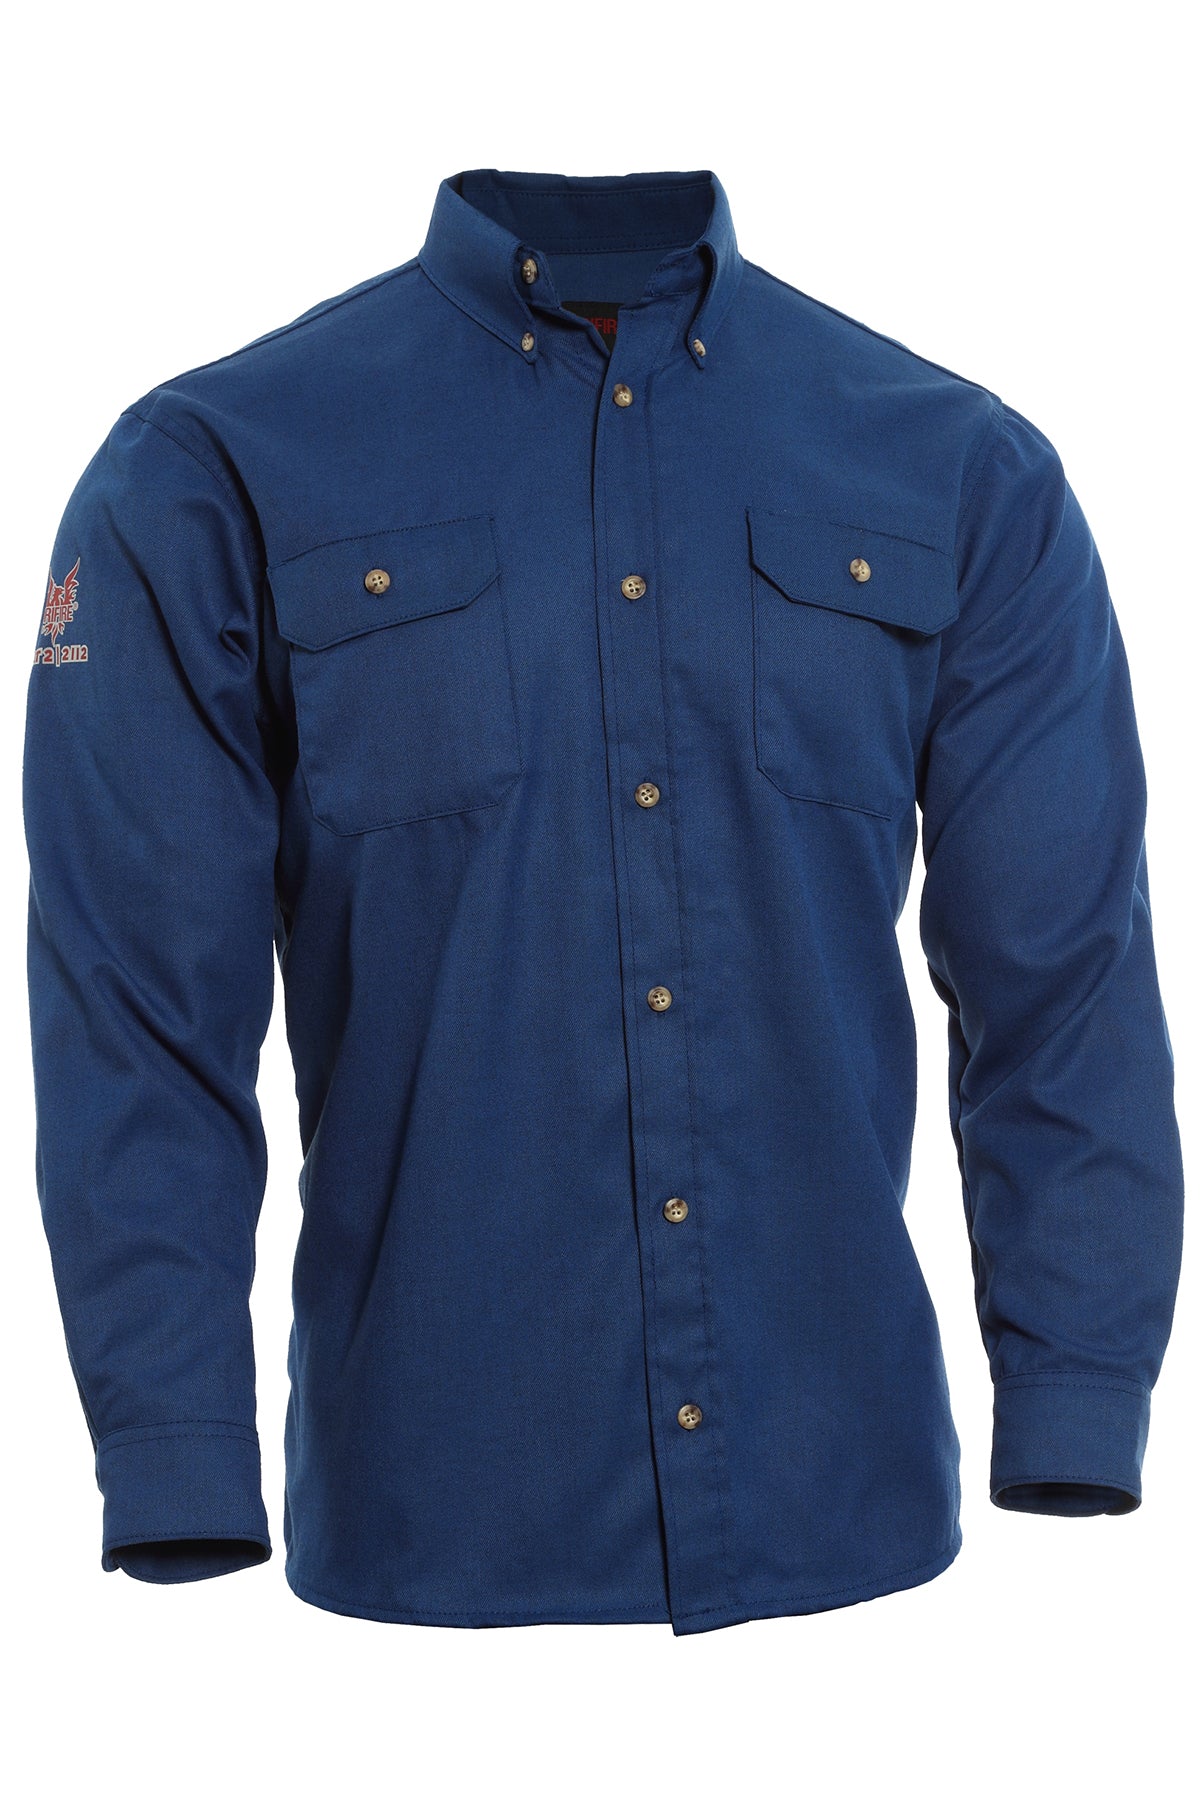 DRIFIRE Tecgen Select Royal Blue 5.5oz Work Shirt TCG011302